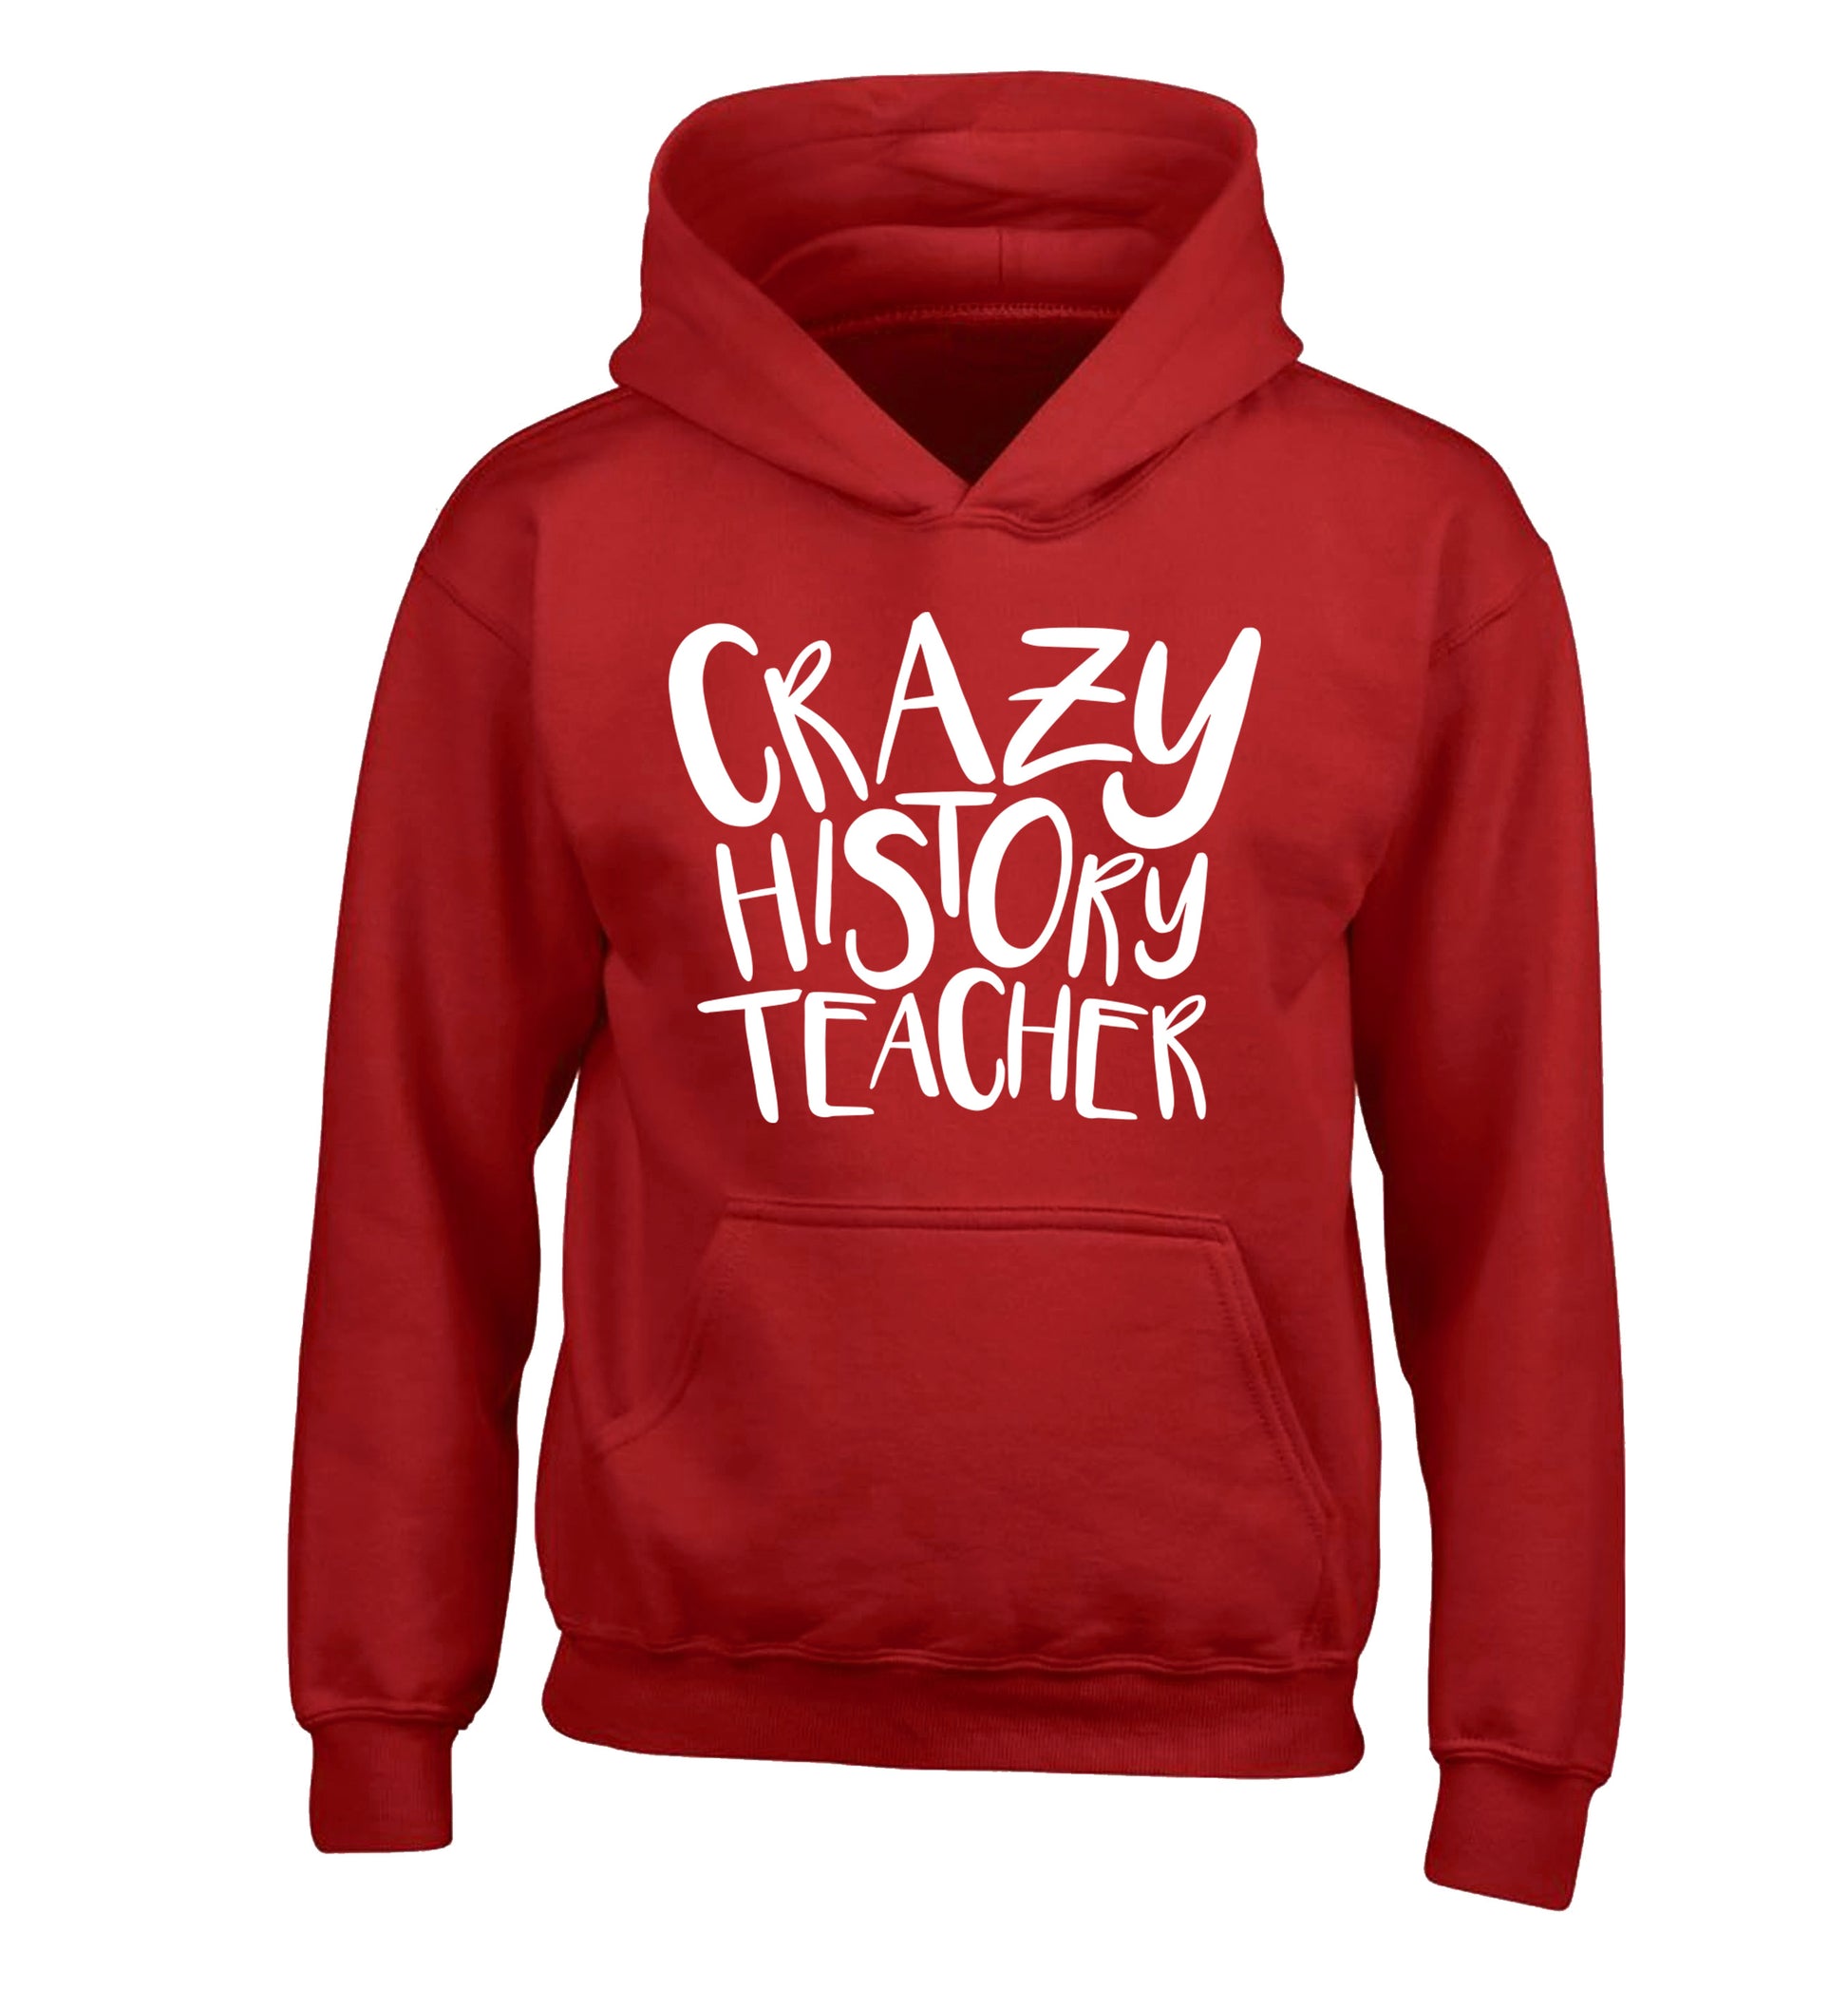 Crazy history teacher children's red hoodie 12-13 Years